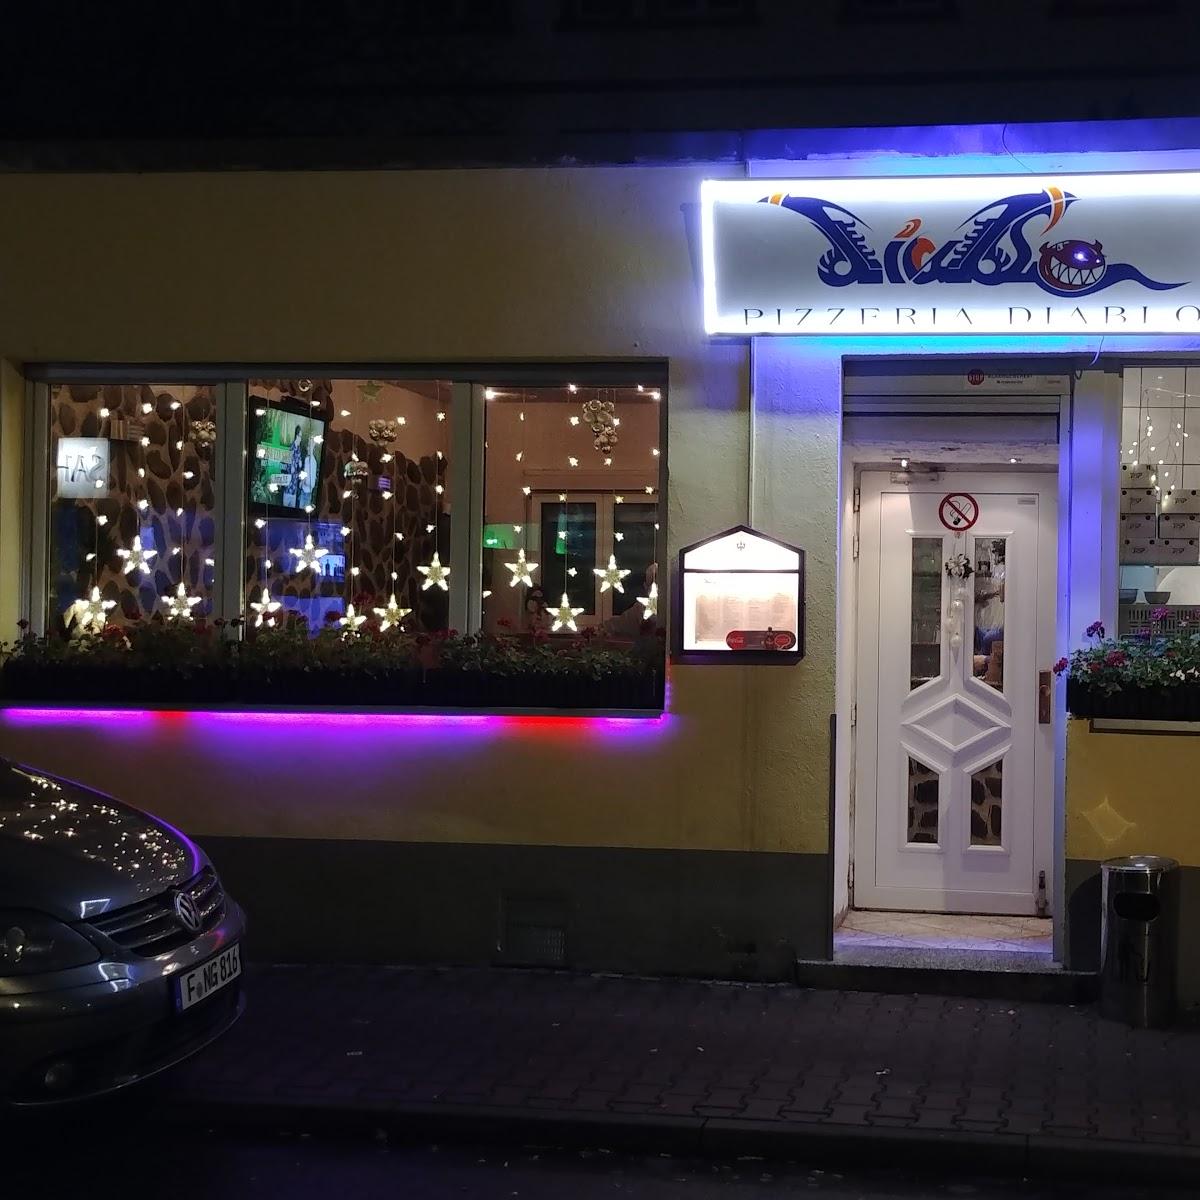 Restaurant "Pizzeria Diablo" in Frankfurt am Main